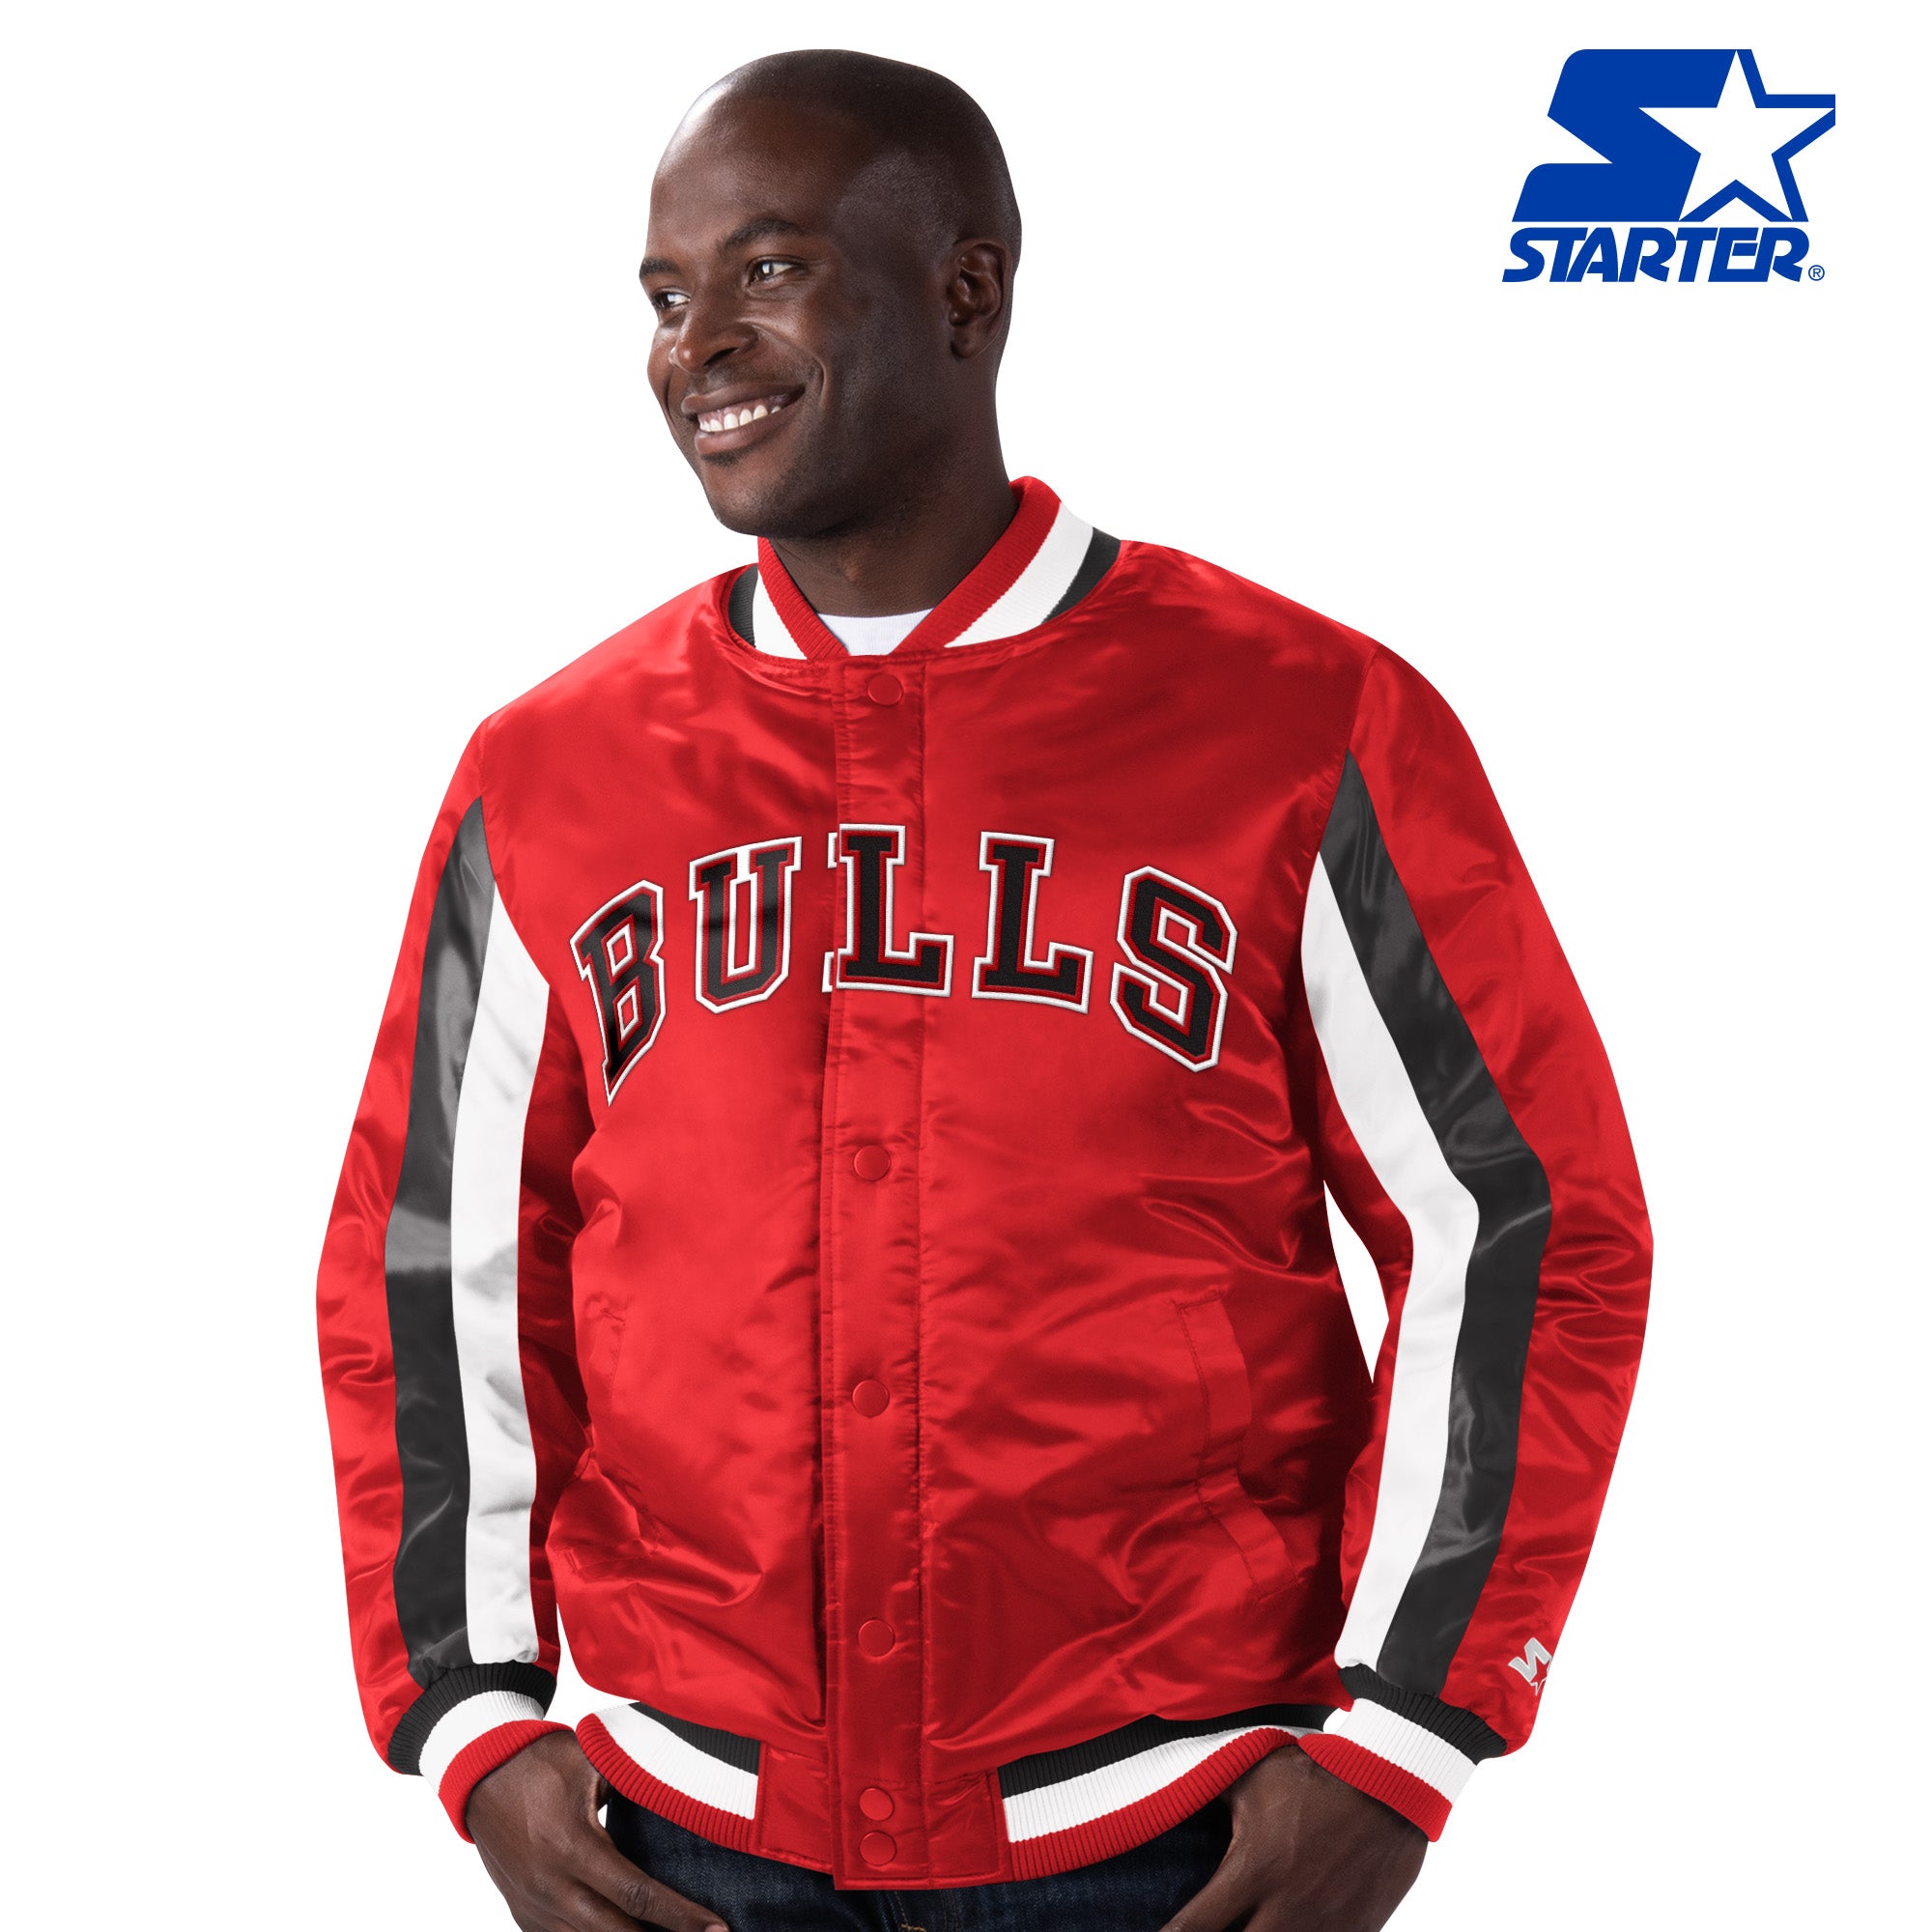 Chicago Bulls Starter jacket  Chicago fashion, Fashion, Jacket outfit women